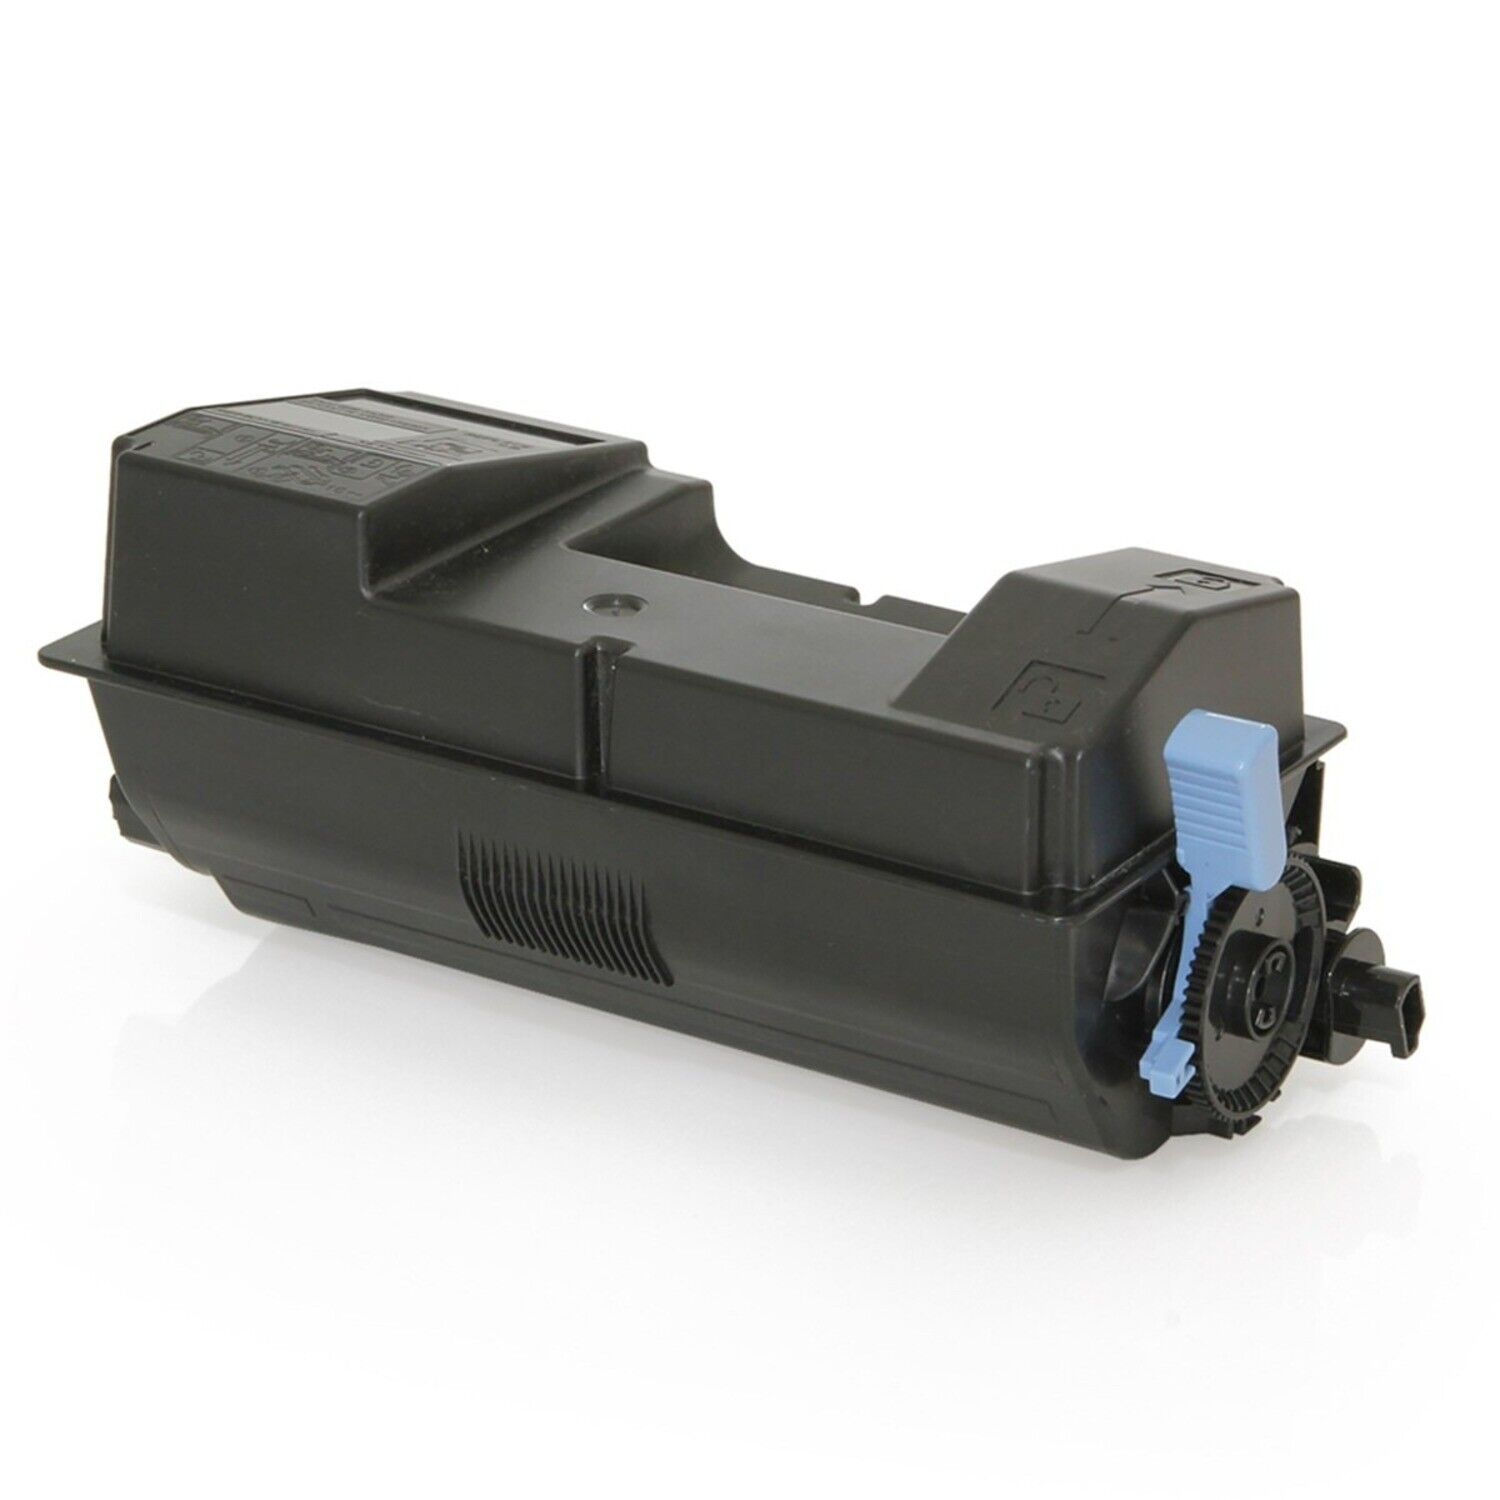 Compatible Kyocera Mita TK-3122 Black Toner Cartridge